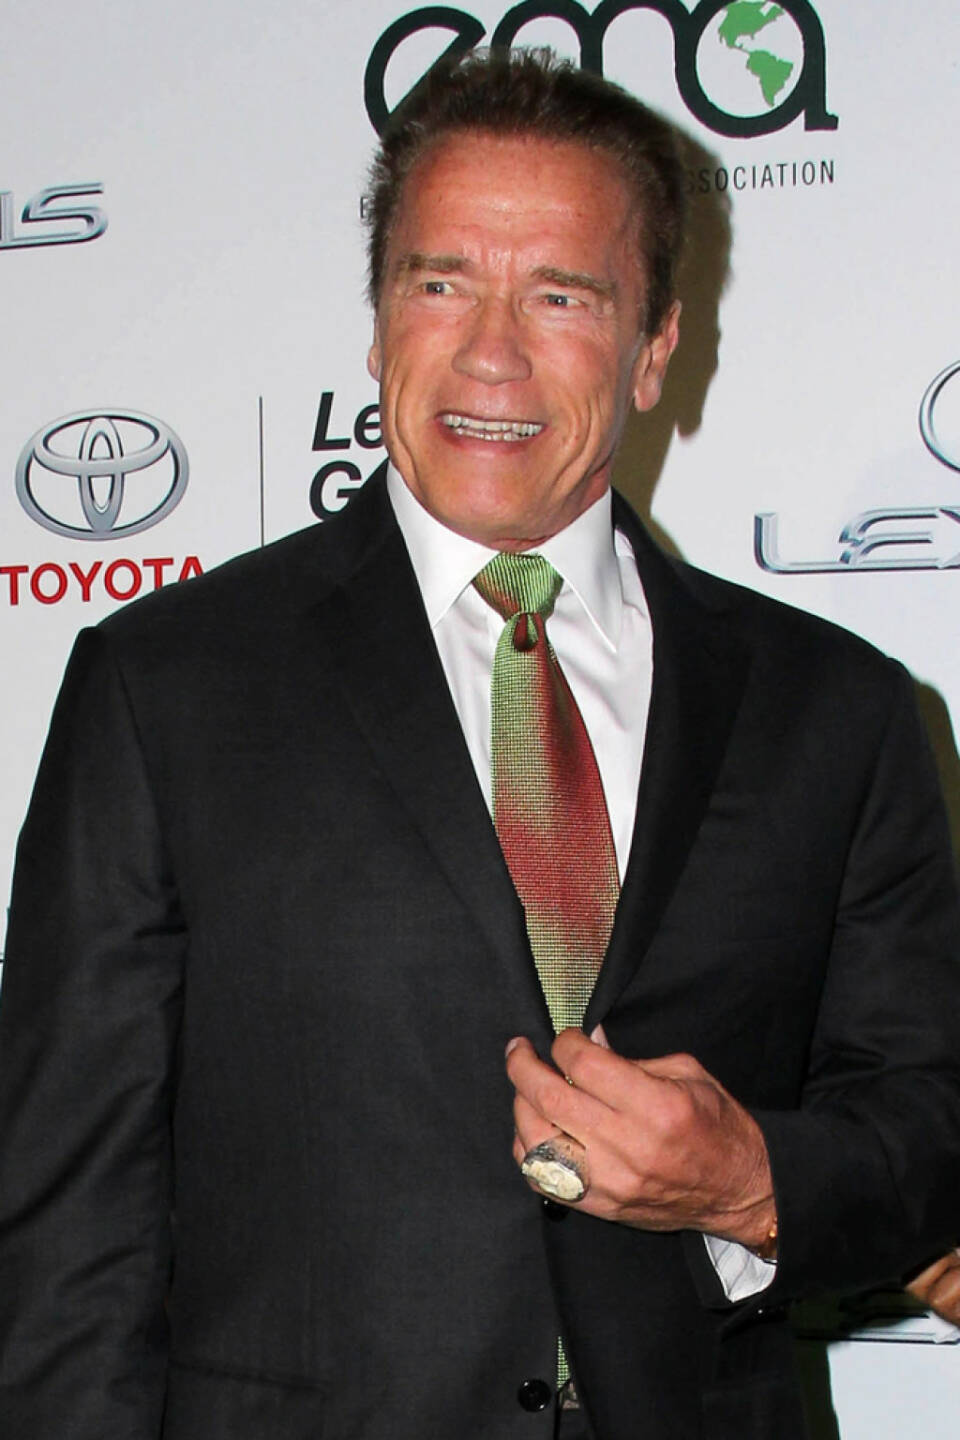 Arnold Schwarzenegger, <a href=http://www.shutterstock.com/gallery-564025p1.html?cr=00&pl=edit-00>Helga Esteb</a> / <a href=http://www.shutterstock.com/editorial?cr=00&pl=edit-00>Shutterstock.com</a>, Helga Esteb / Shutterstock.com
